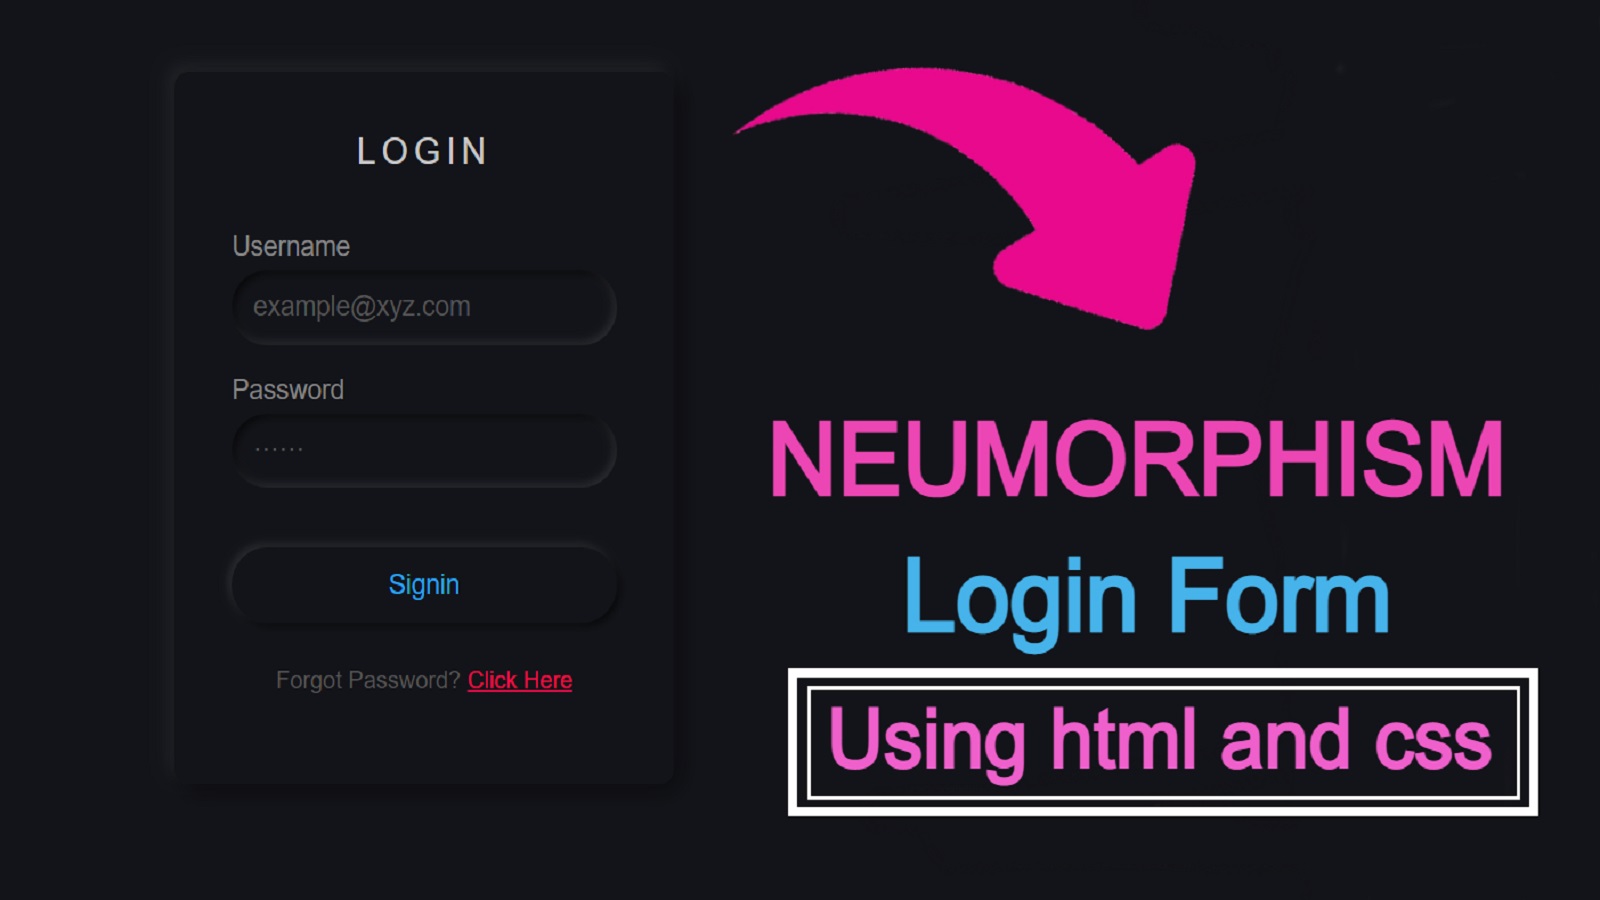 Neumorphism login form using html and css.jpg